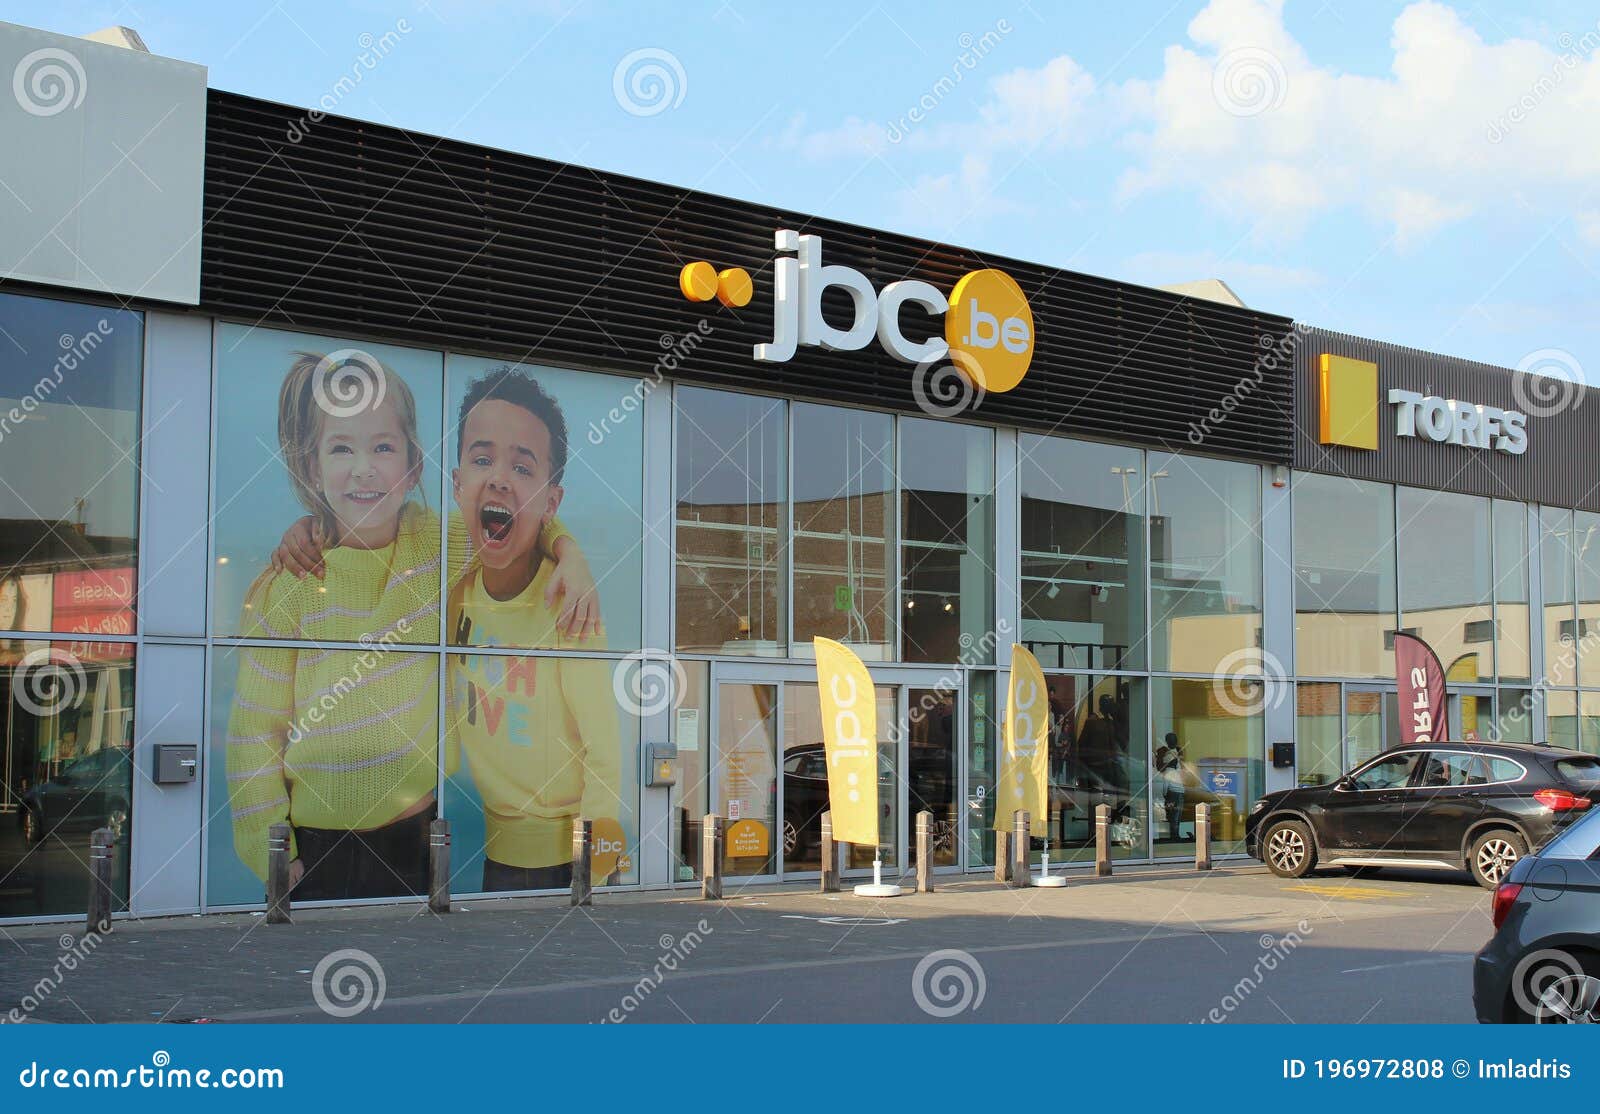 JBC Clothing Chain Store, Flanders, Belgium Editorial Stock Photo